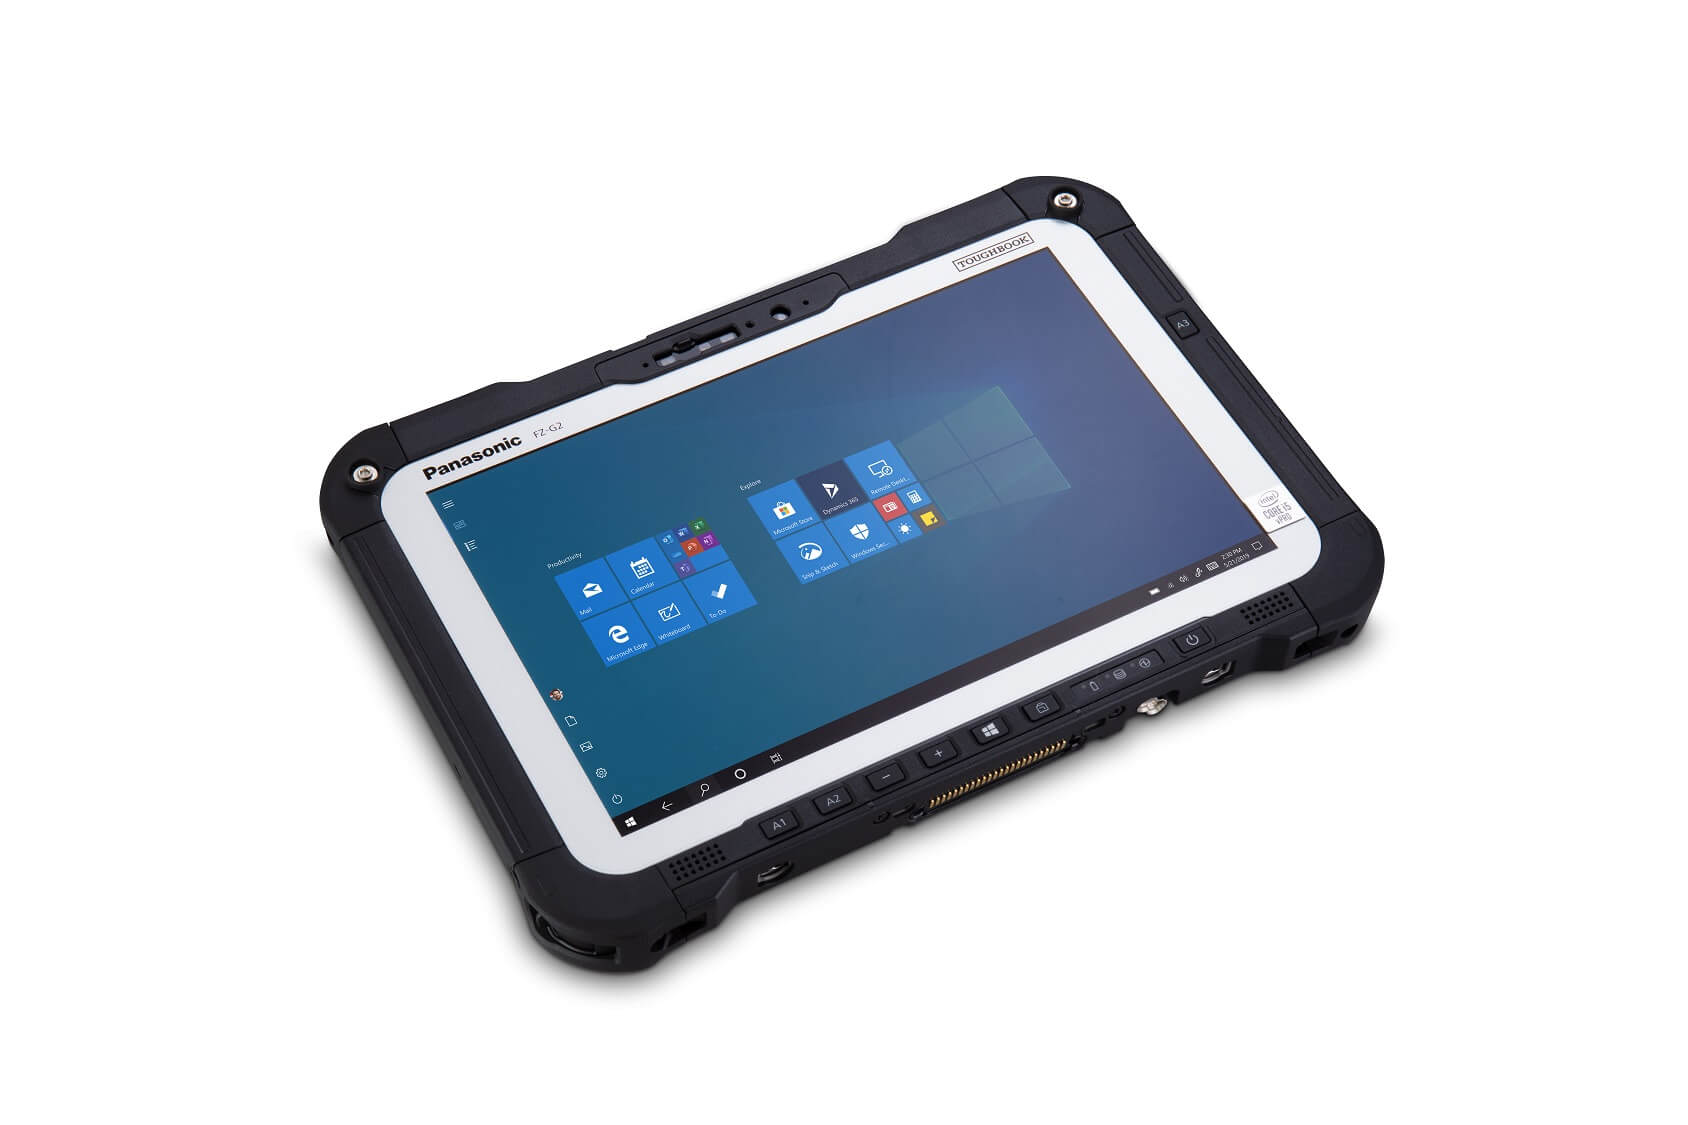 PANASONIC TOUGHBOOK G2 tablet para trabajadores móviles